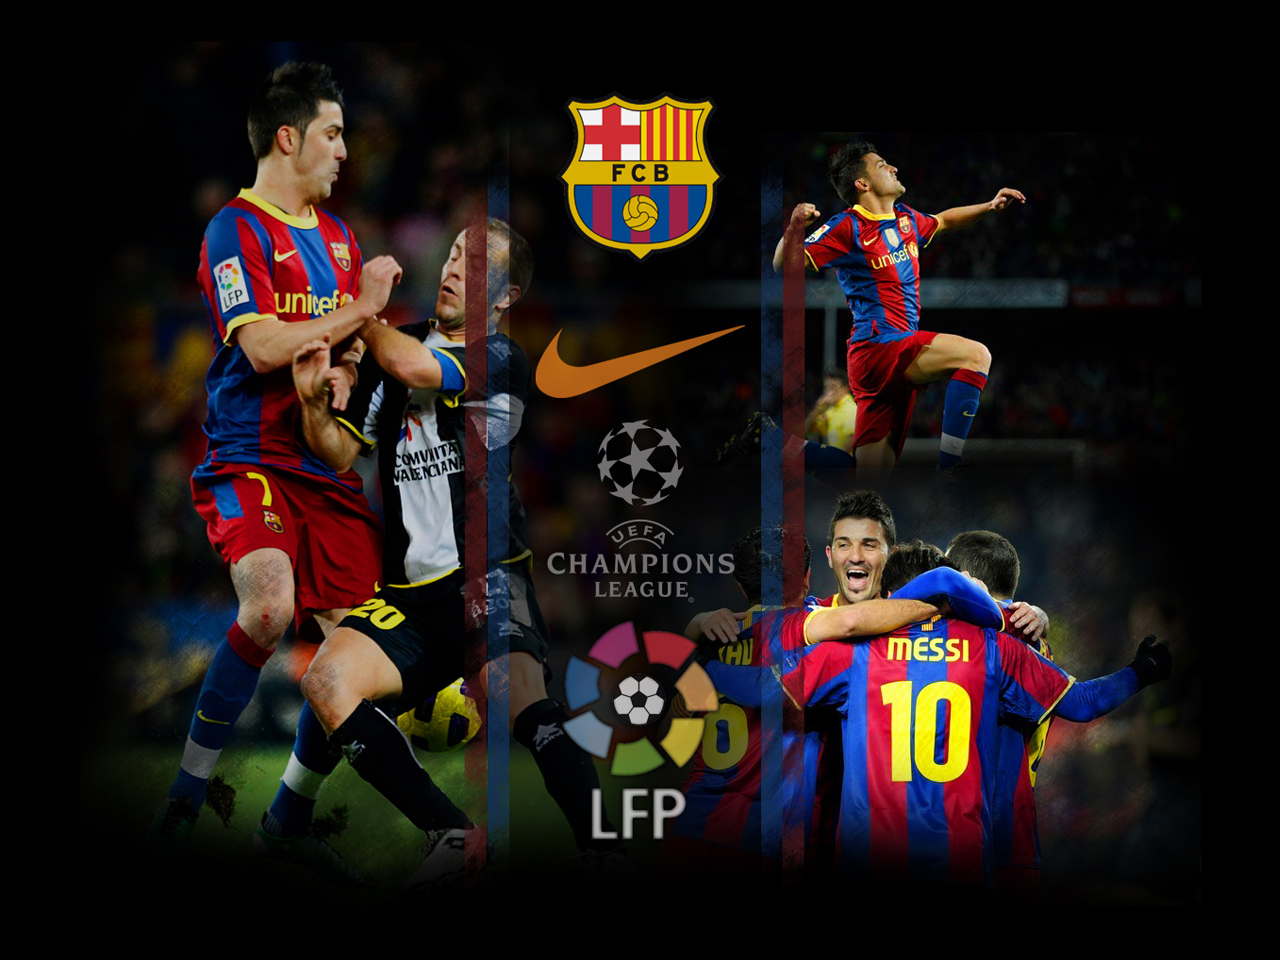 FC Barcelona 008 team